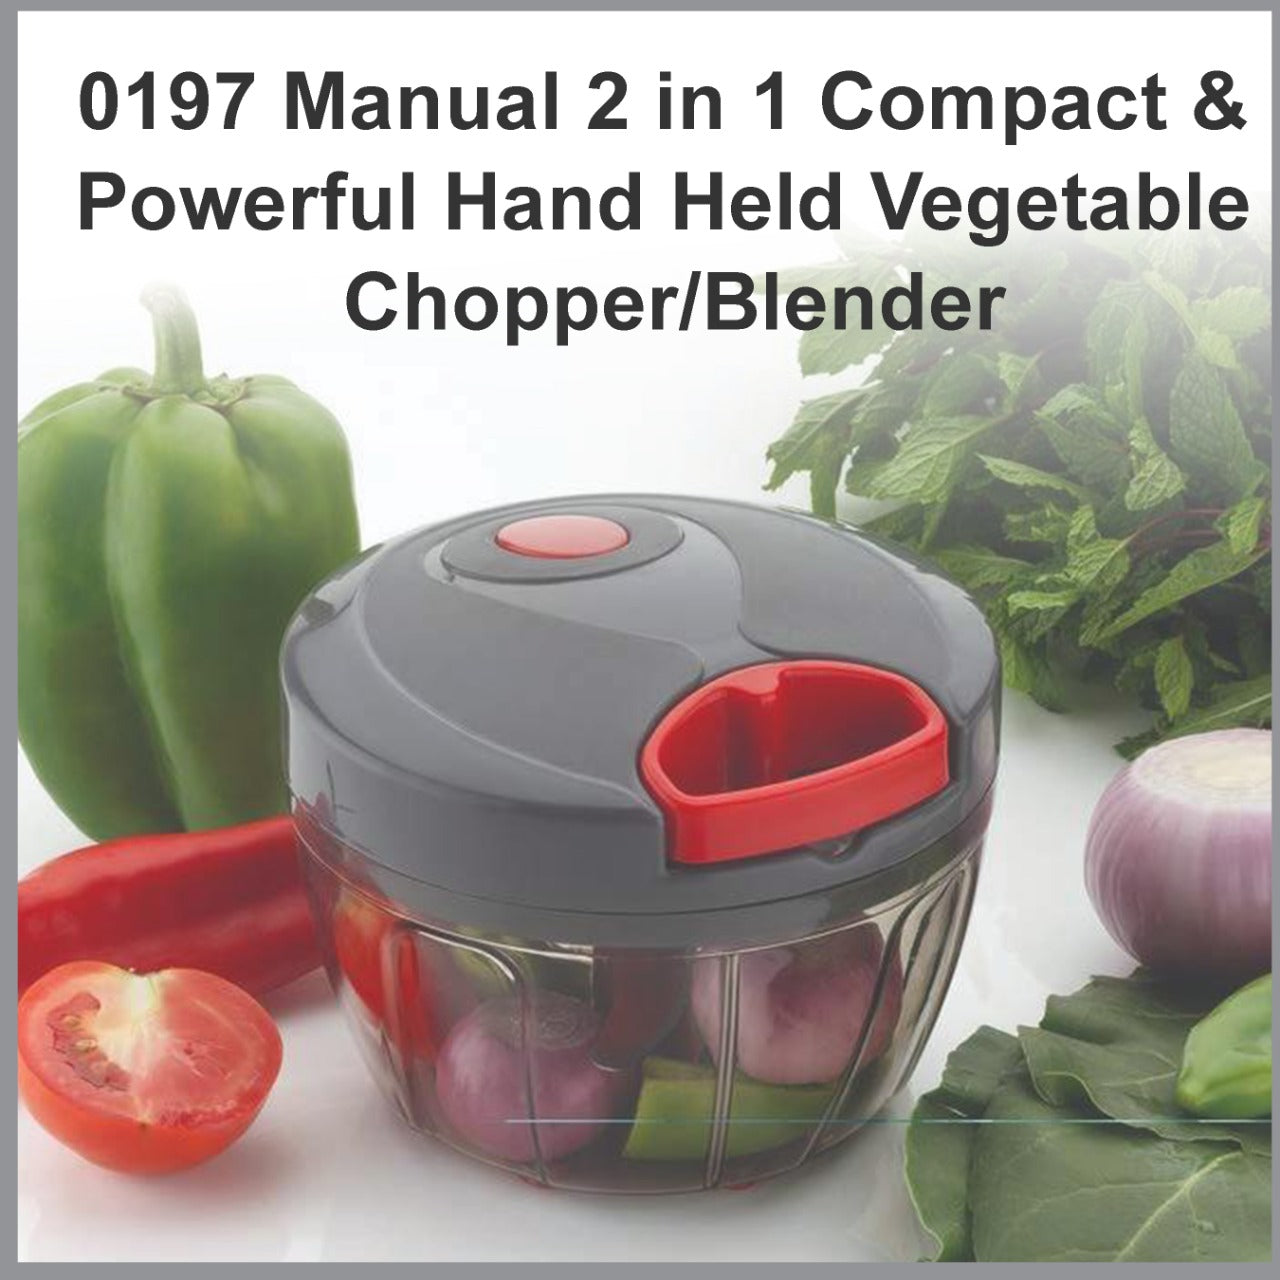 Manual 2 in 1 Compact & Powerful Hand Held Vegetable Chopper/Blender